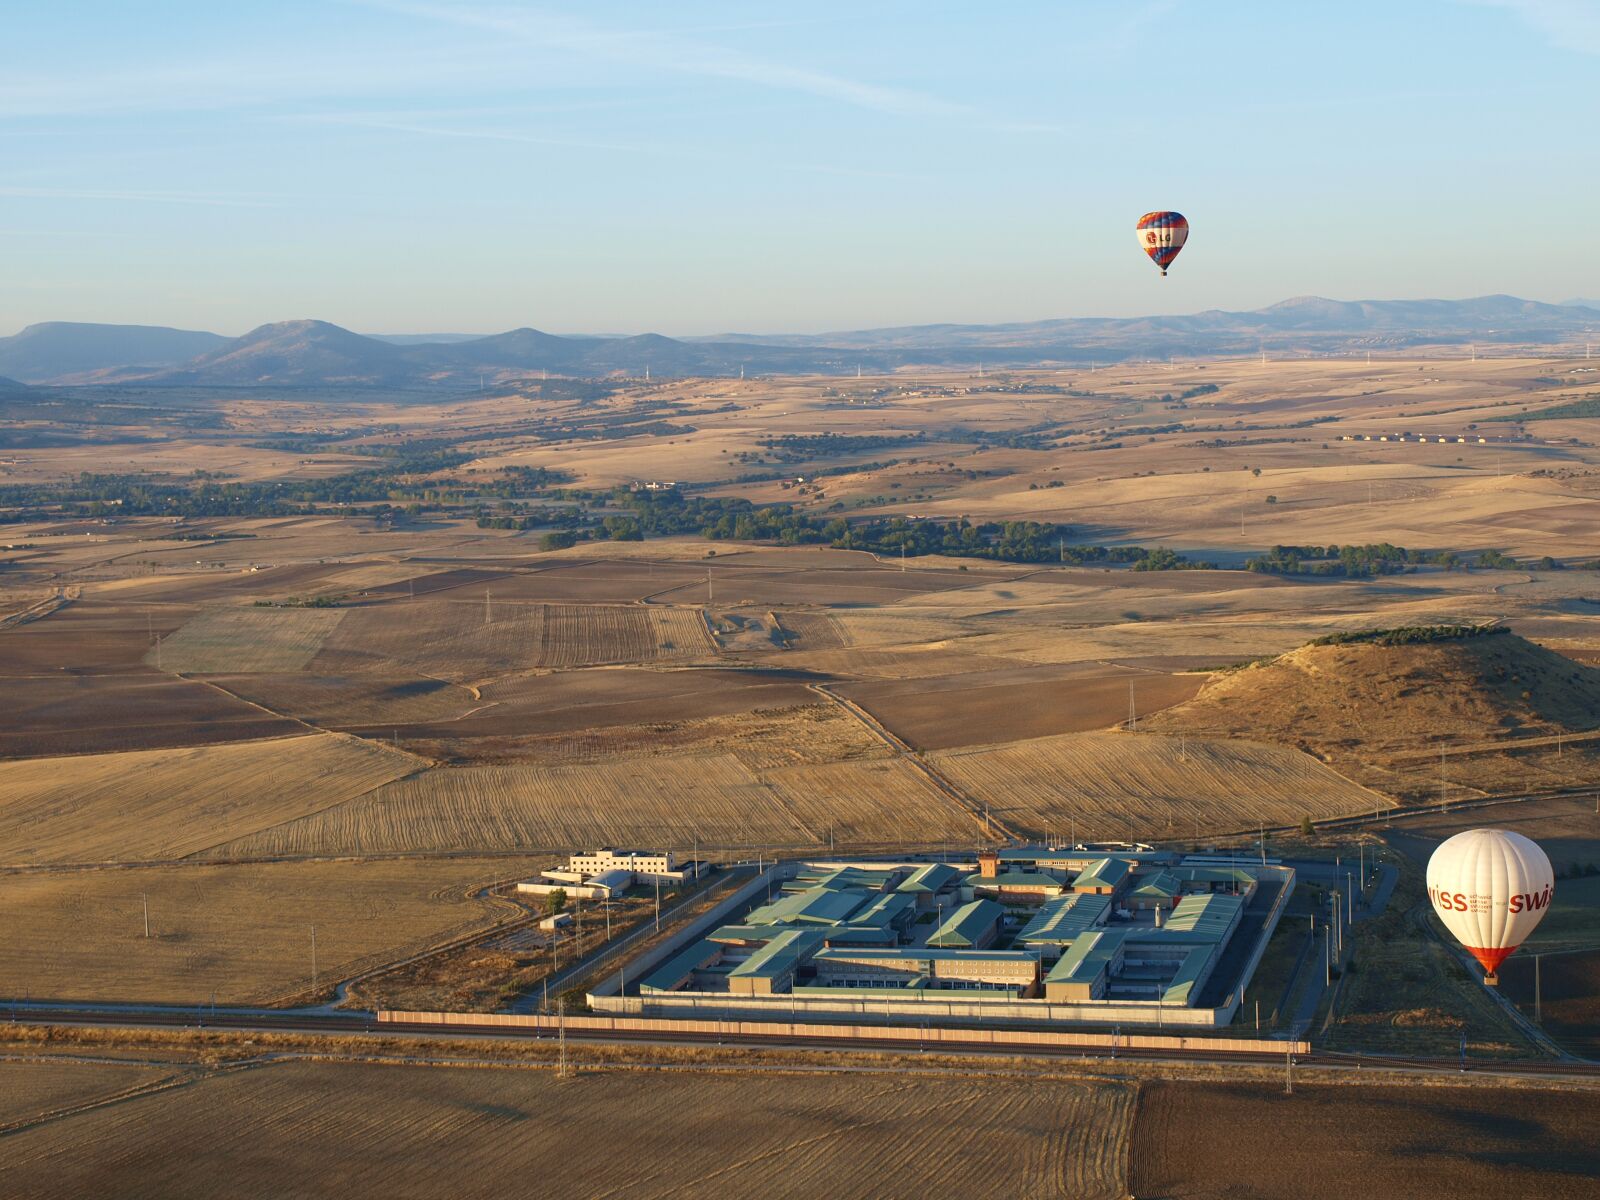 Olympus E-420 (EVOLT E-420) sample photo. Balloon, aerostatic, flying photography